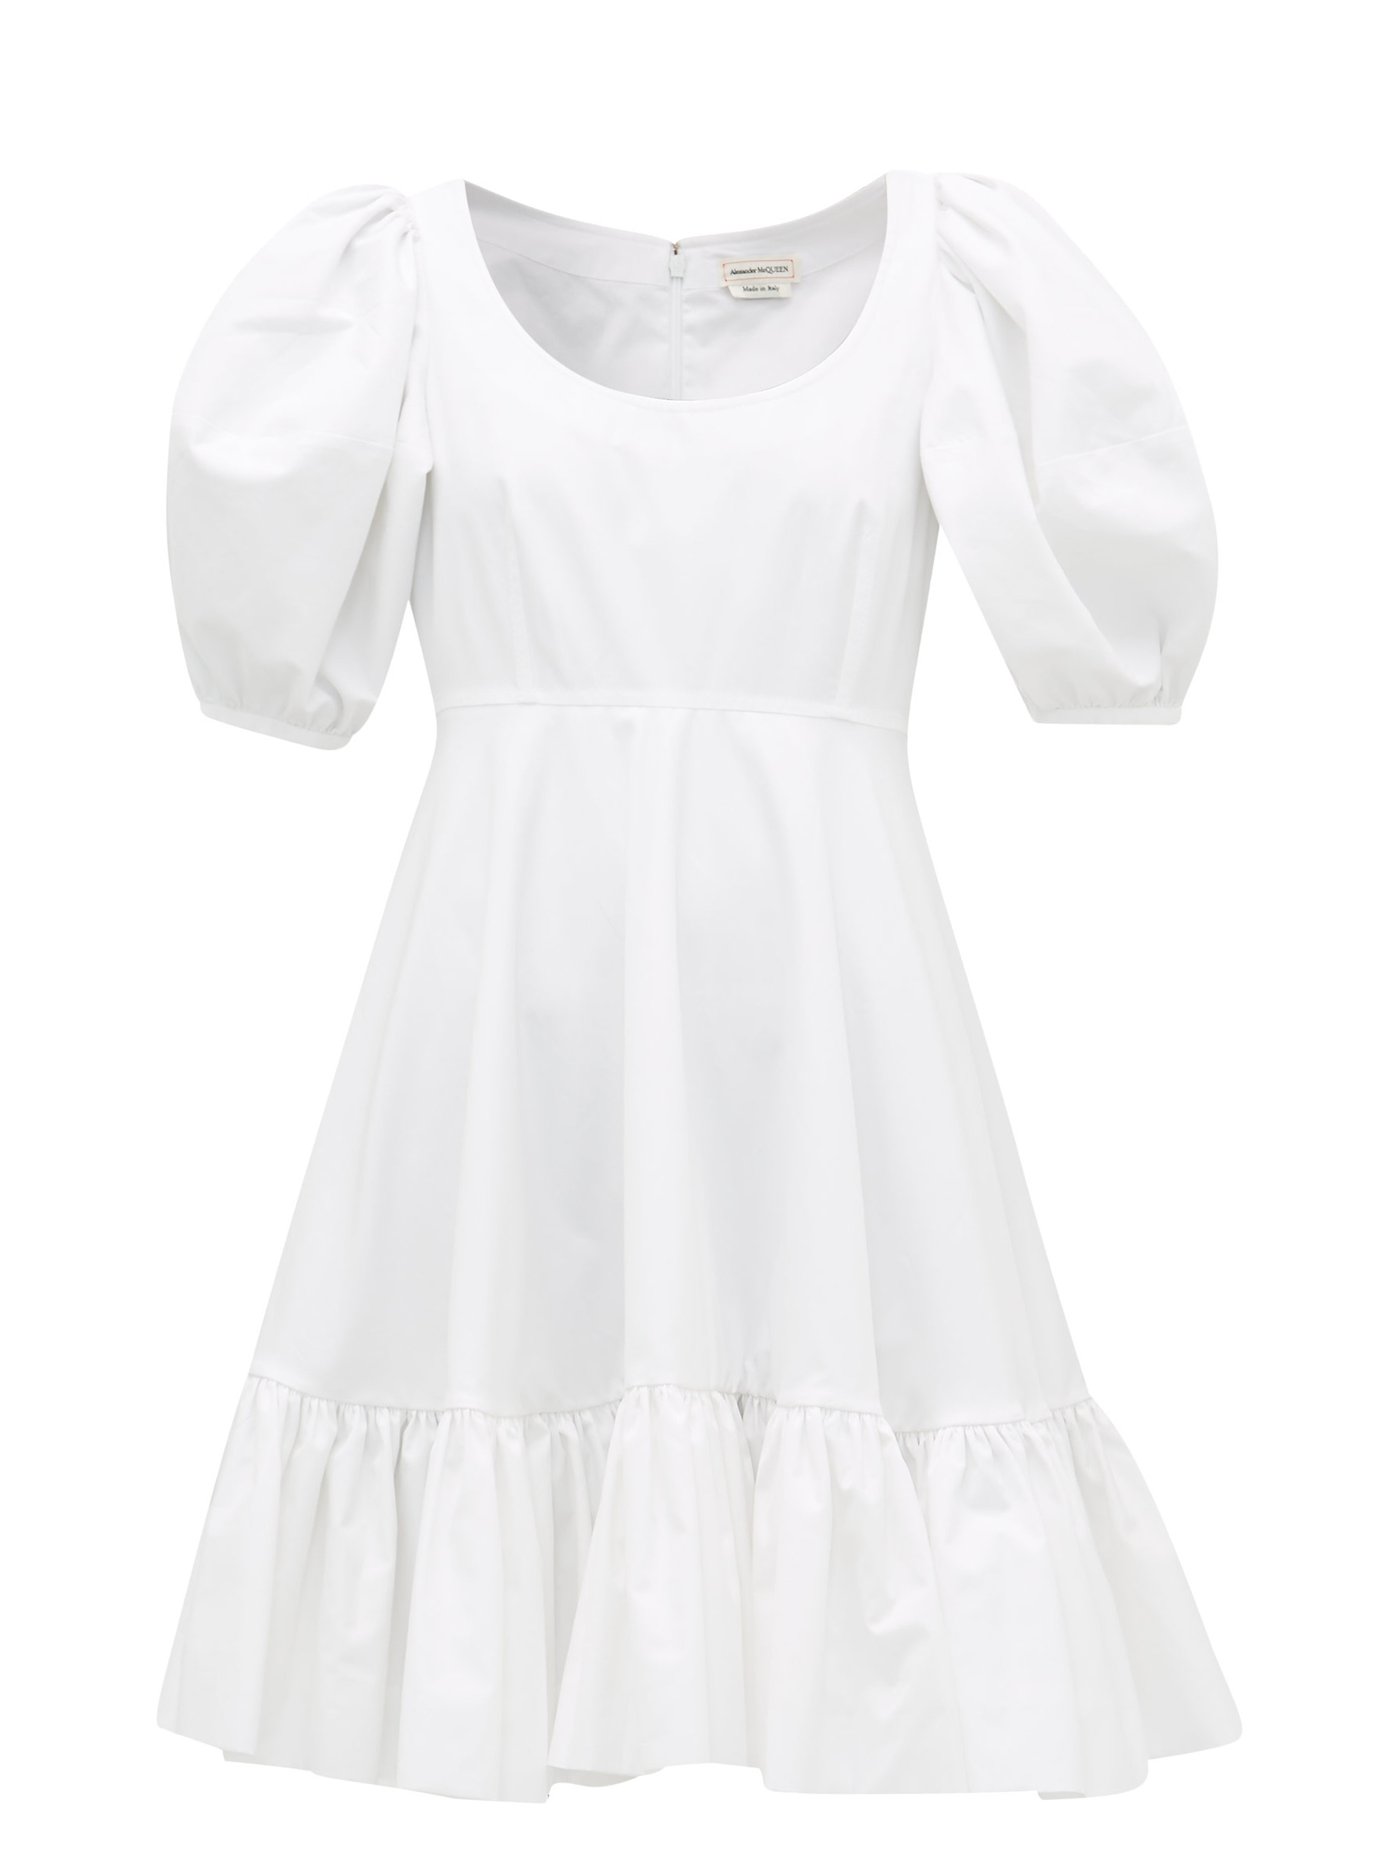 mcqueen white dress